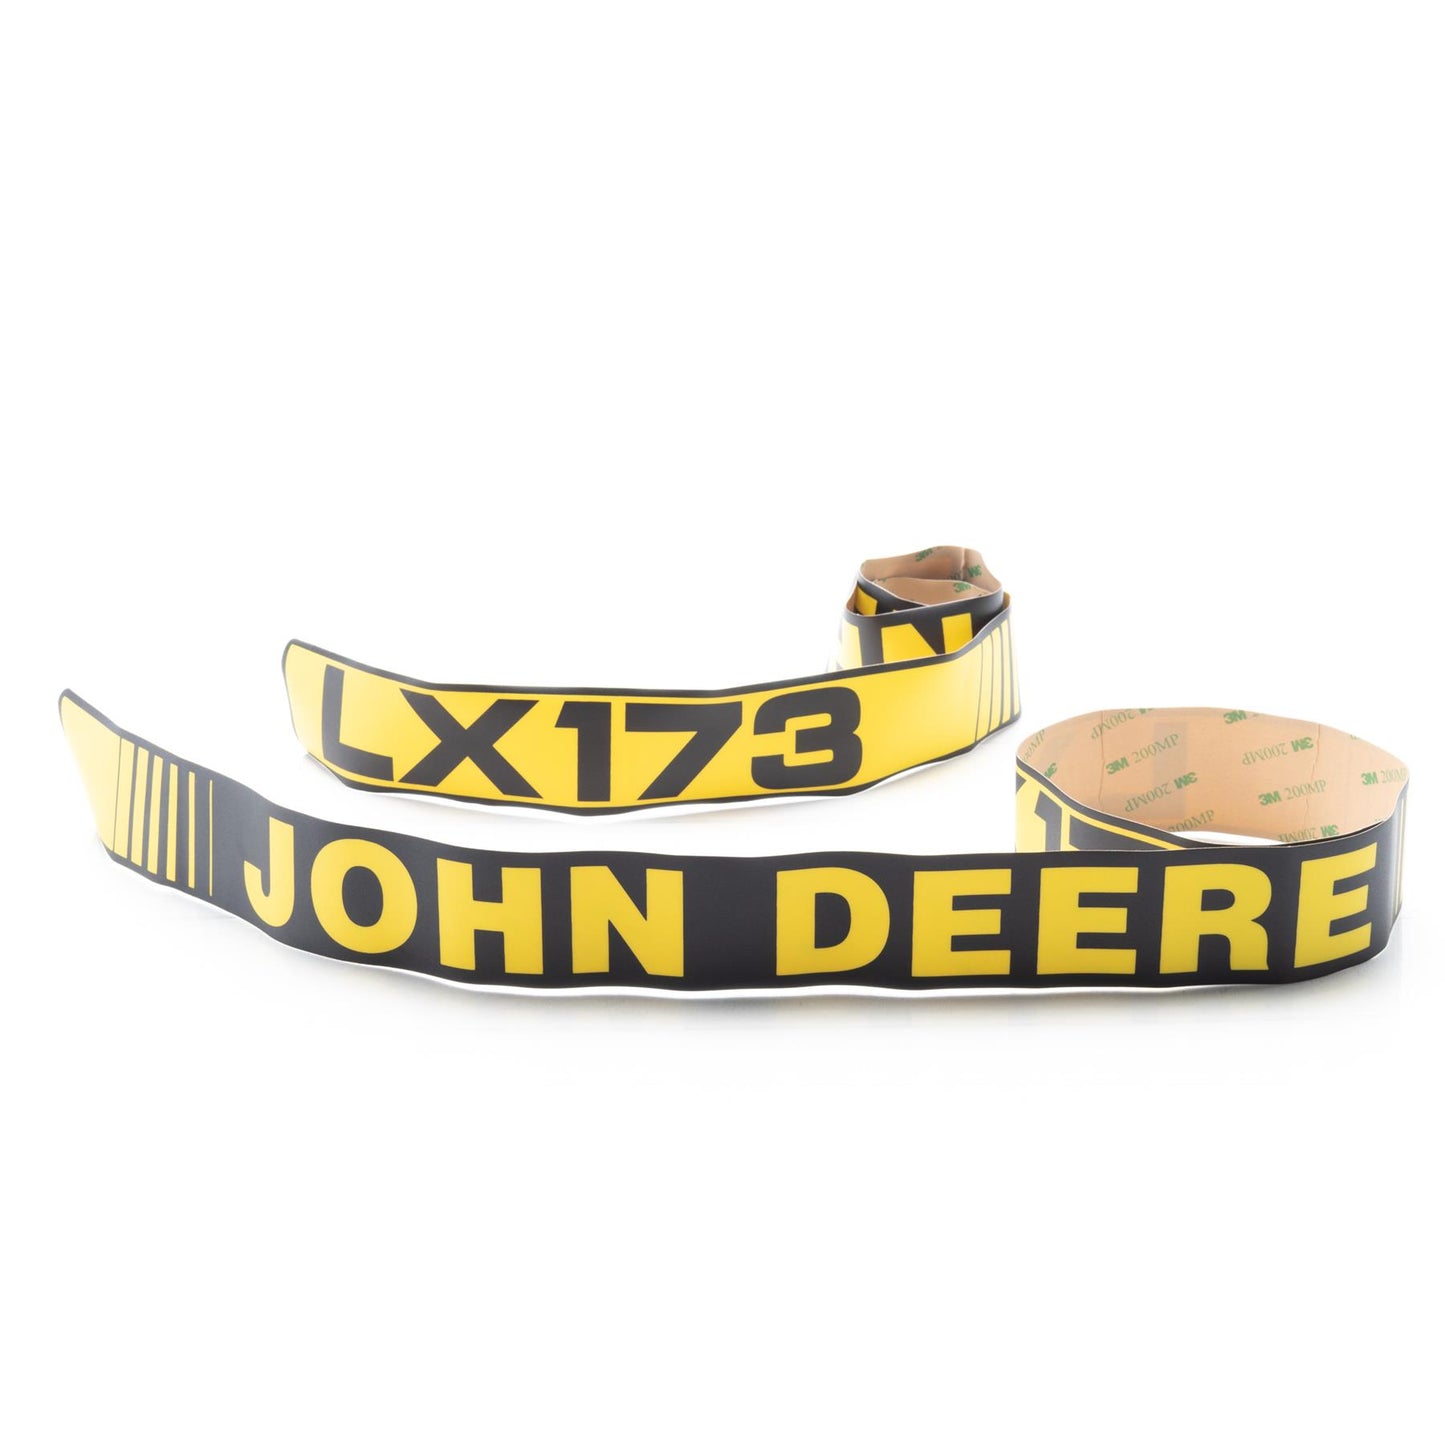 John Deere Decal - LX173 - Both Sides - M116892 M116893